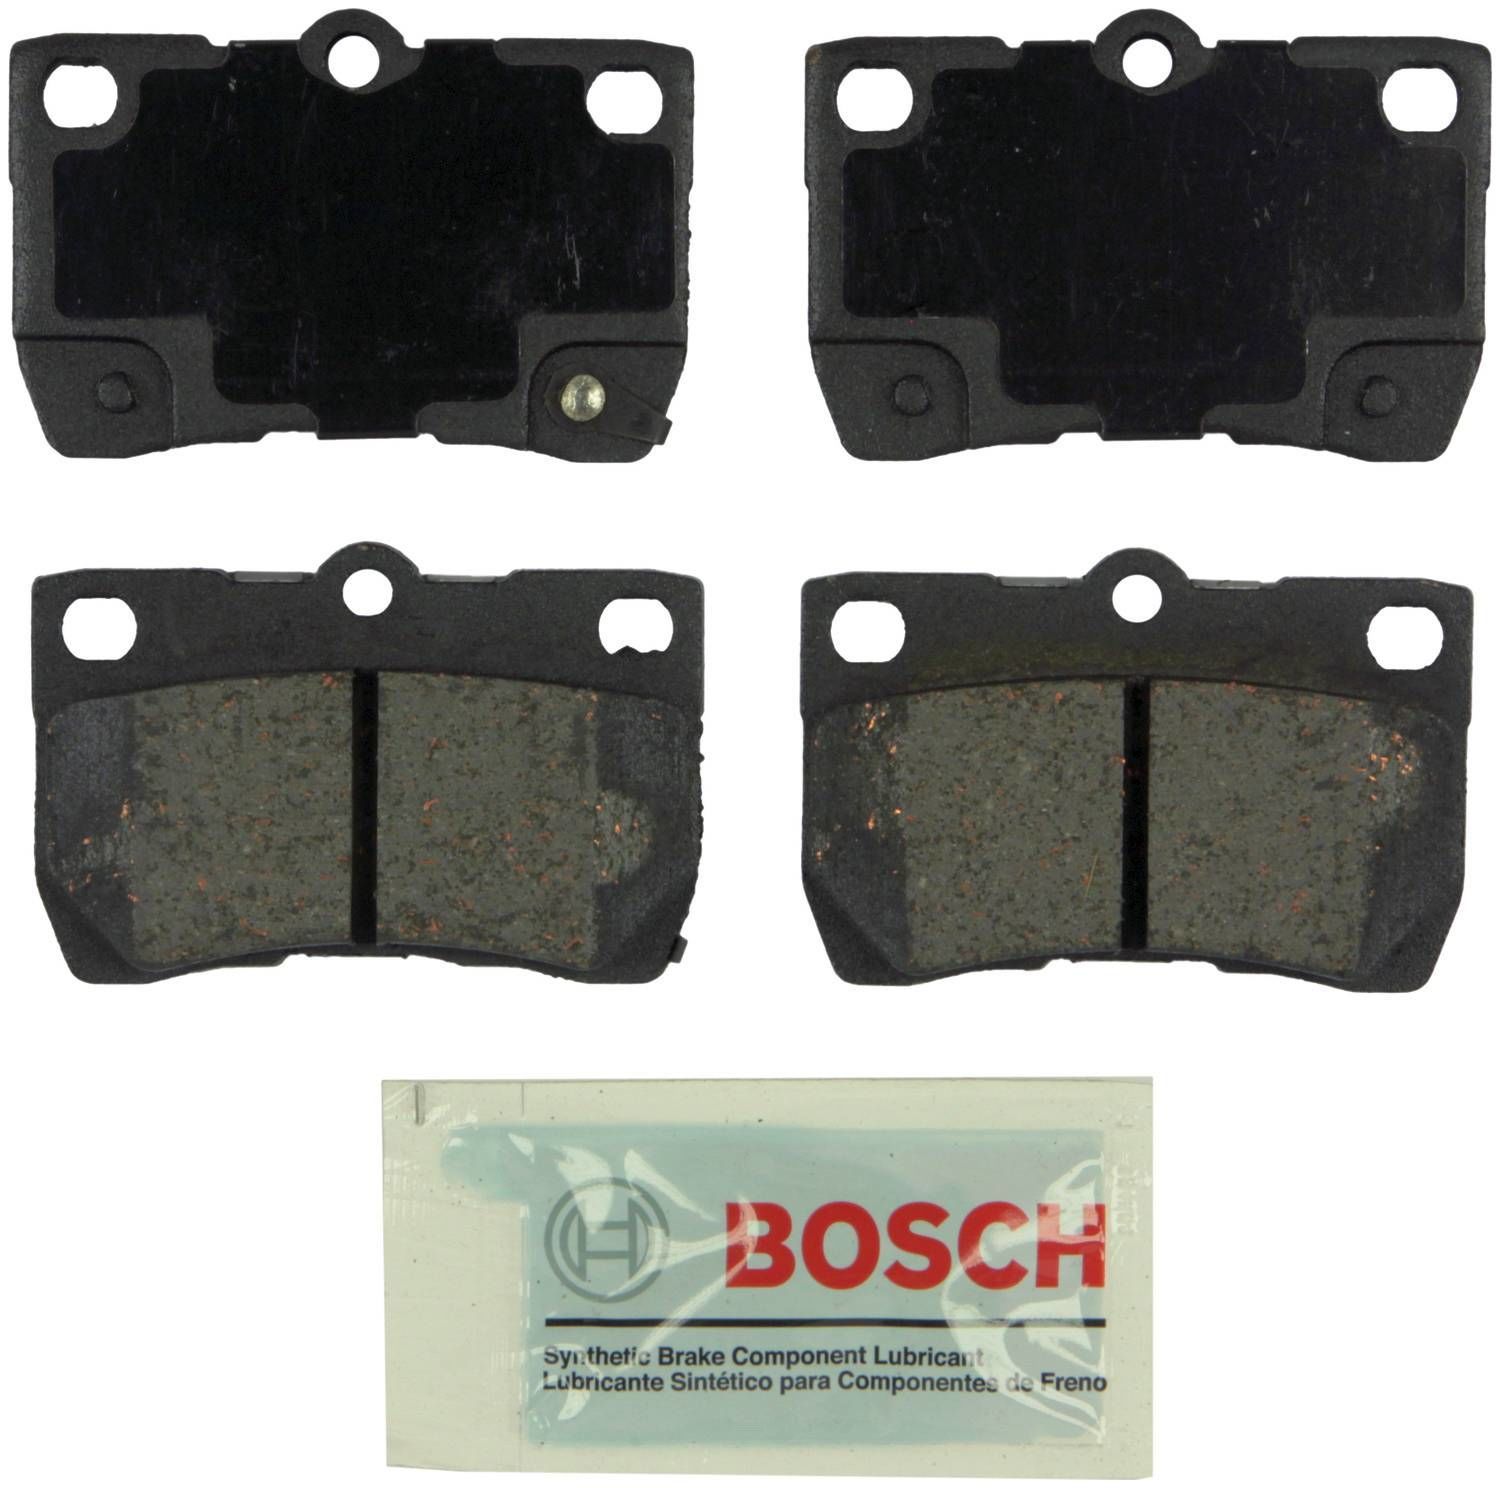 BOSCH BRAKE - Bosch Blue Ceramic Brake Pads (Rear) - BQC BE1113